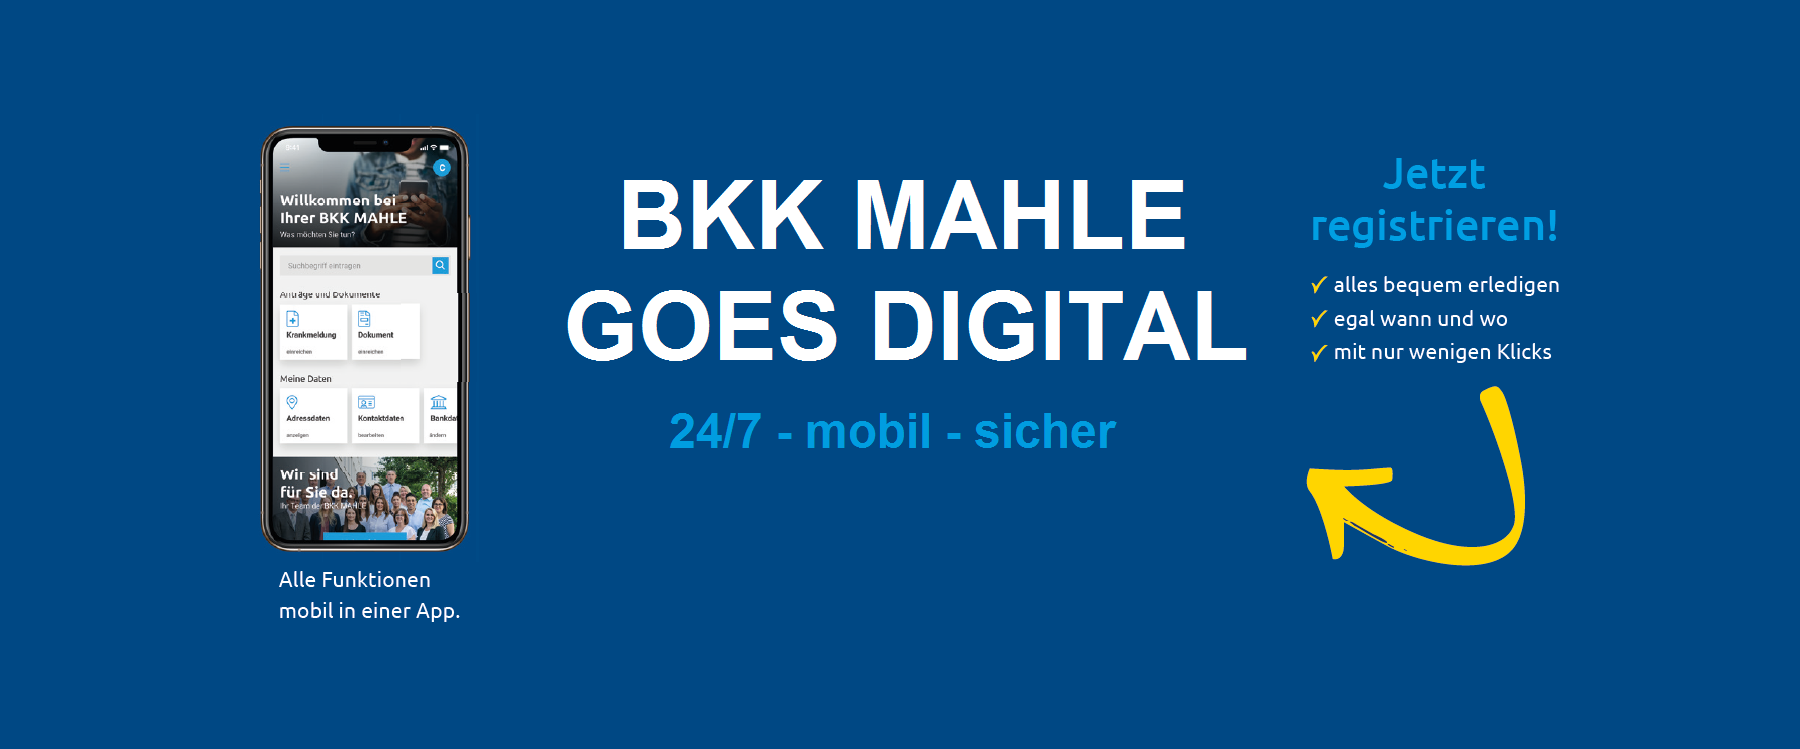 Unsere BKK MAHLE Service-App